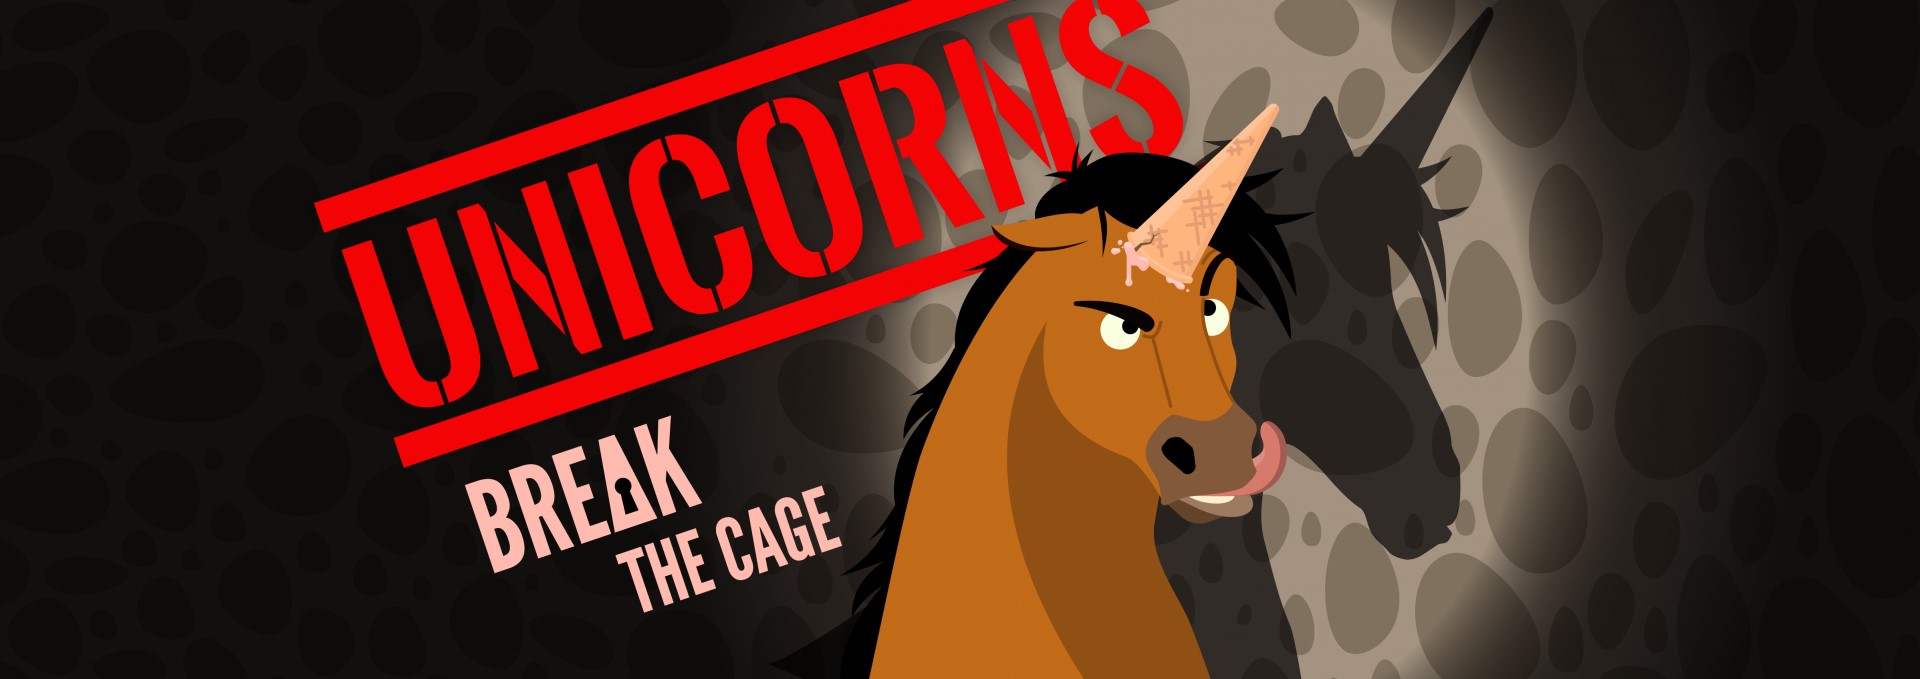 Unicorns: Break the Cage banner